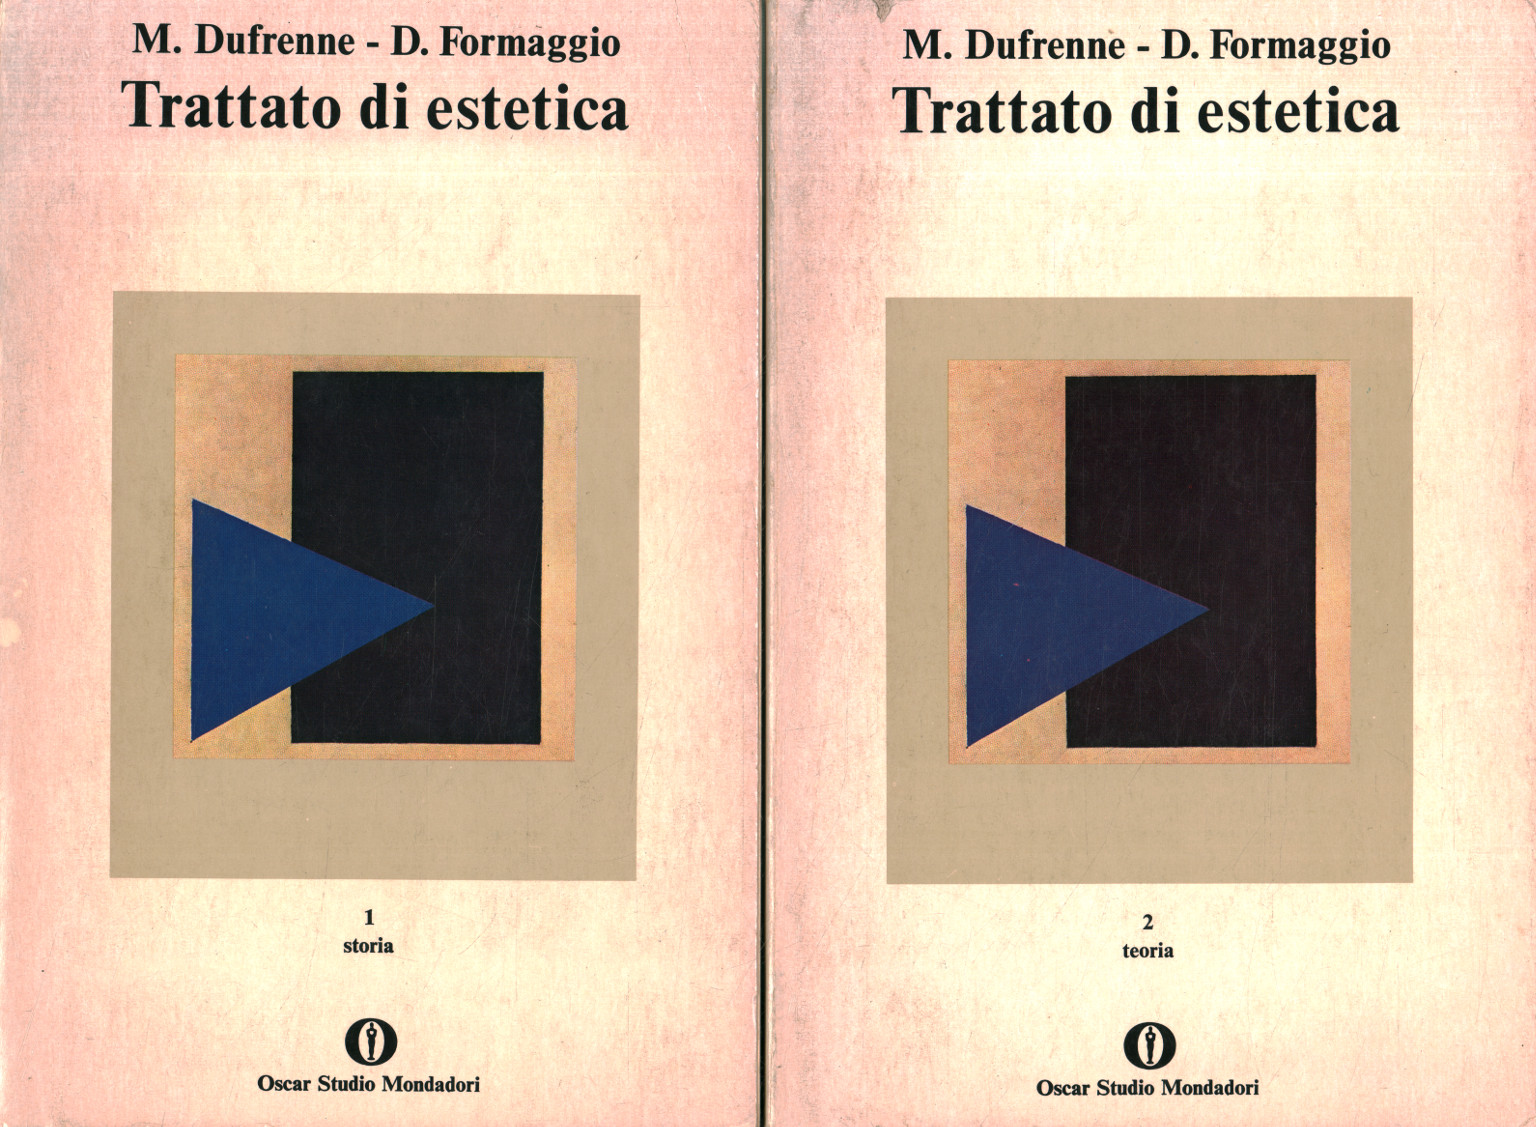 Treatise on aesthetics (2 volumes)